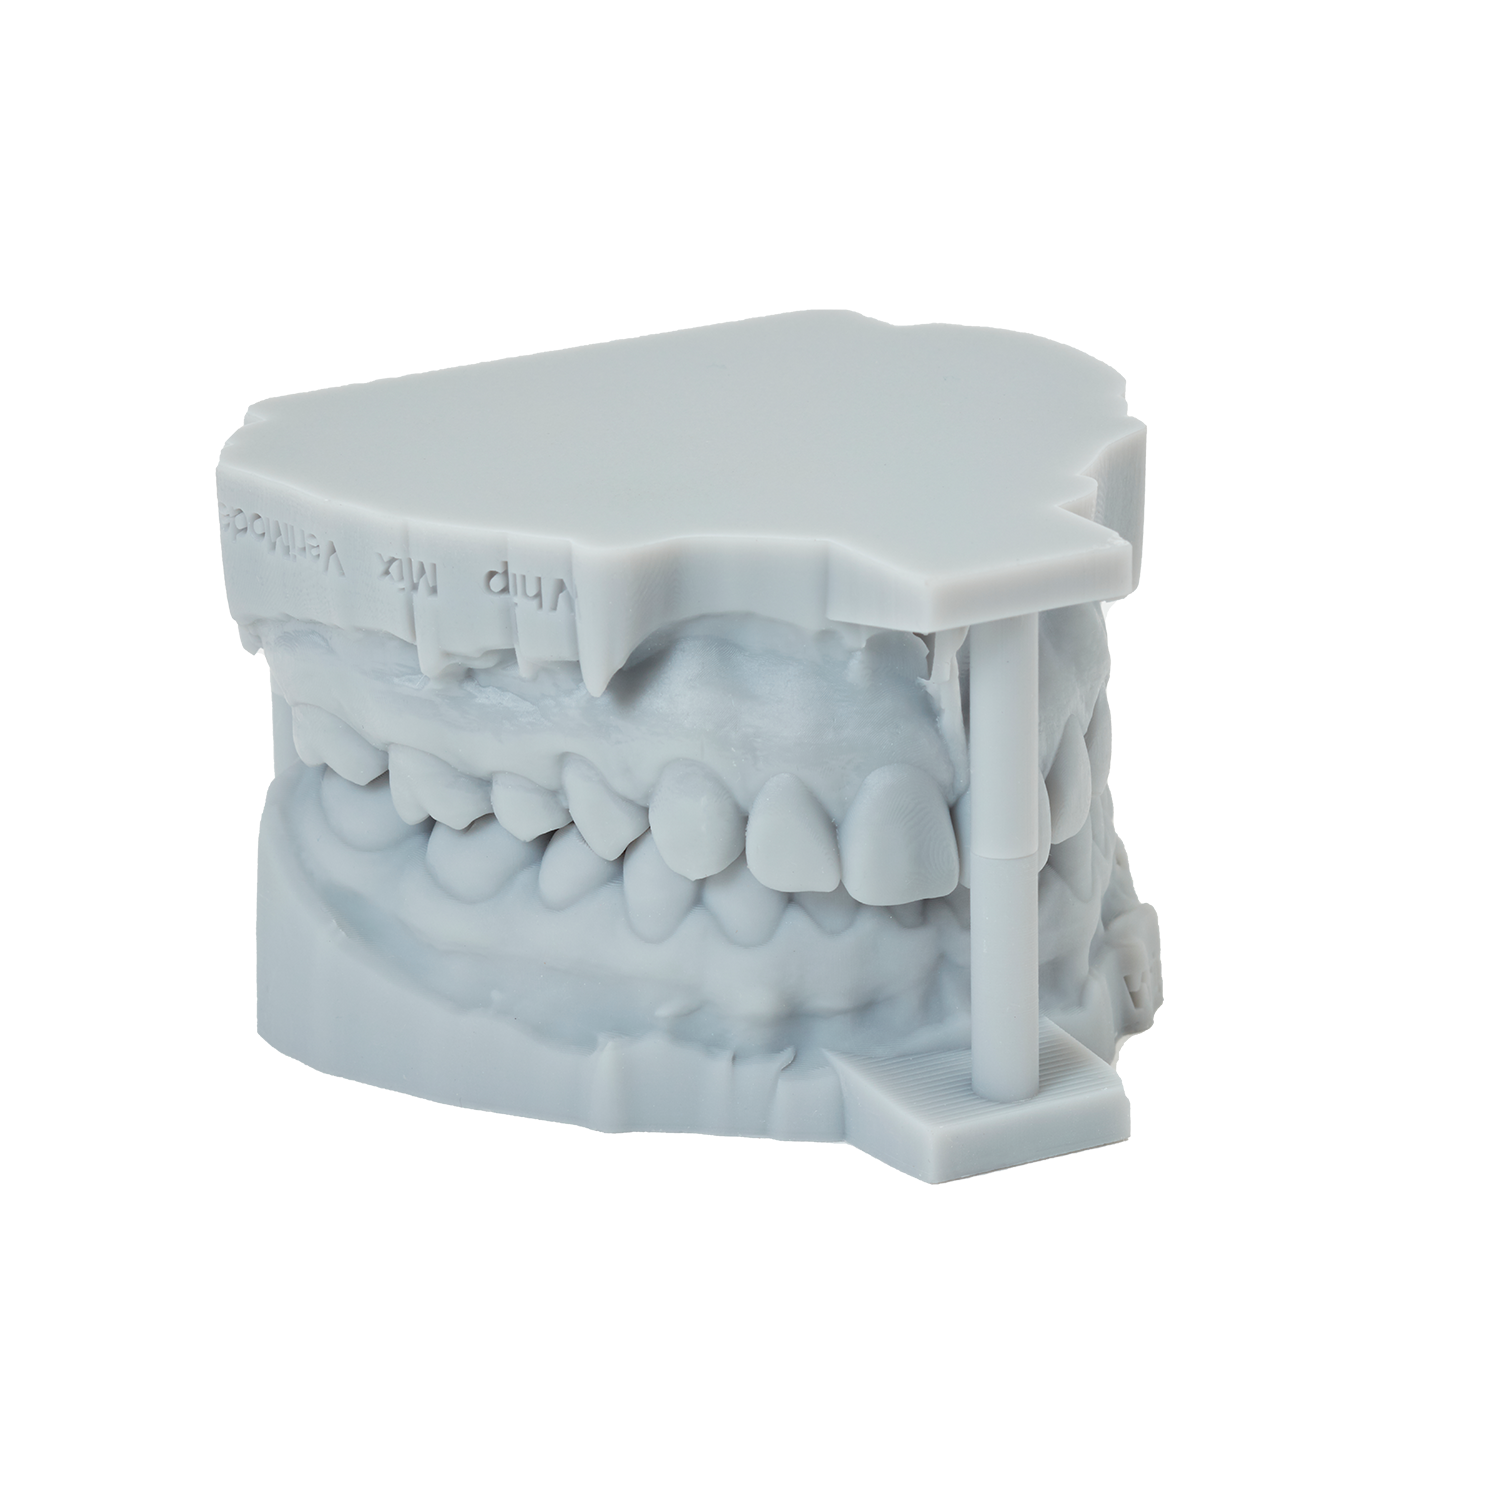 3D print resin curing unit - CUREbox Plus - Whip Mix Corporation - for  dental laboratories